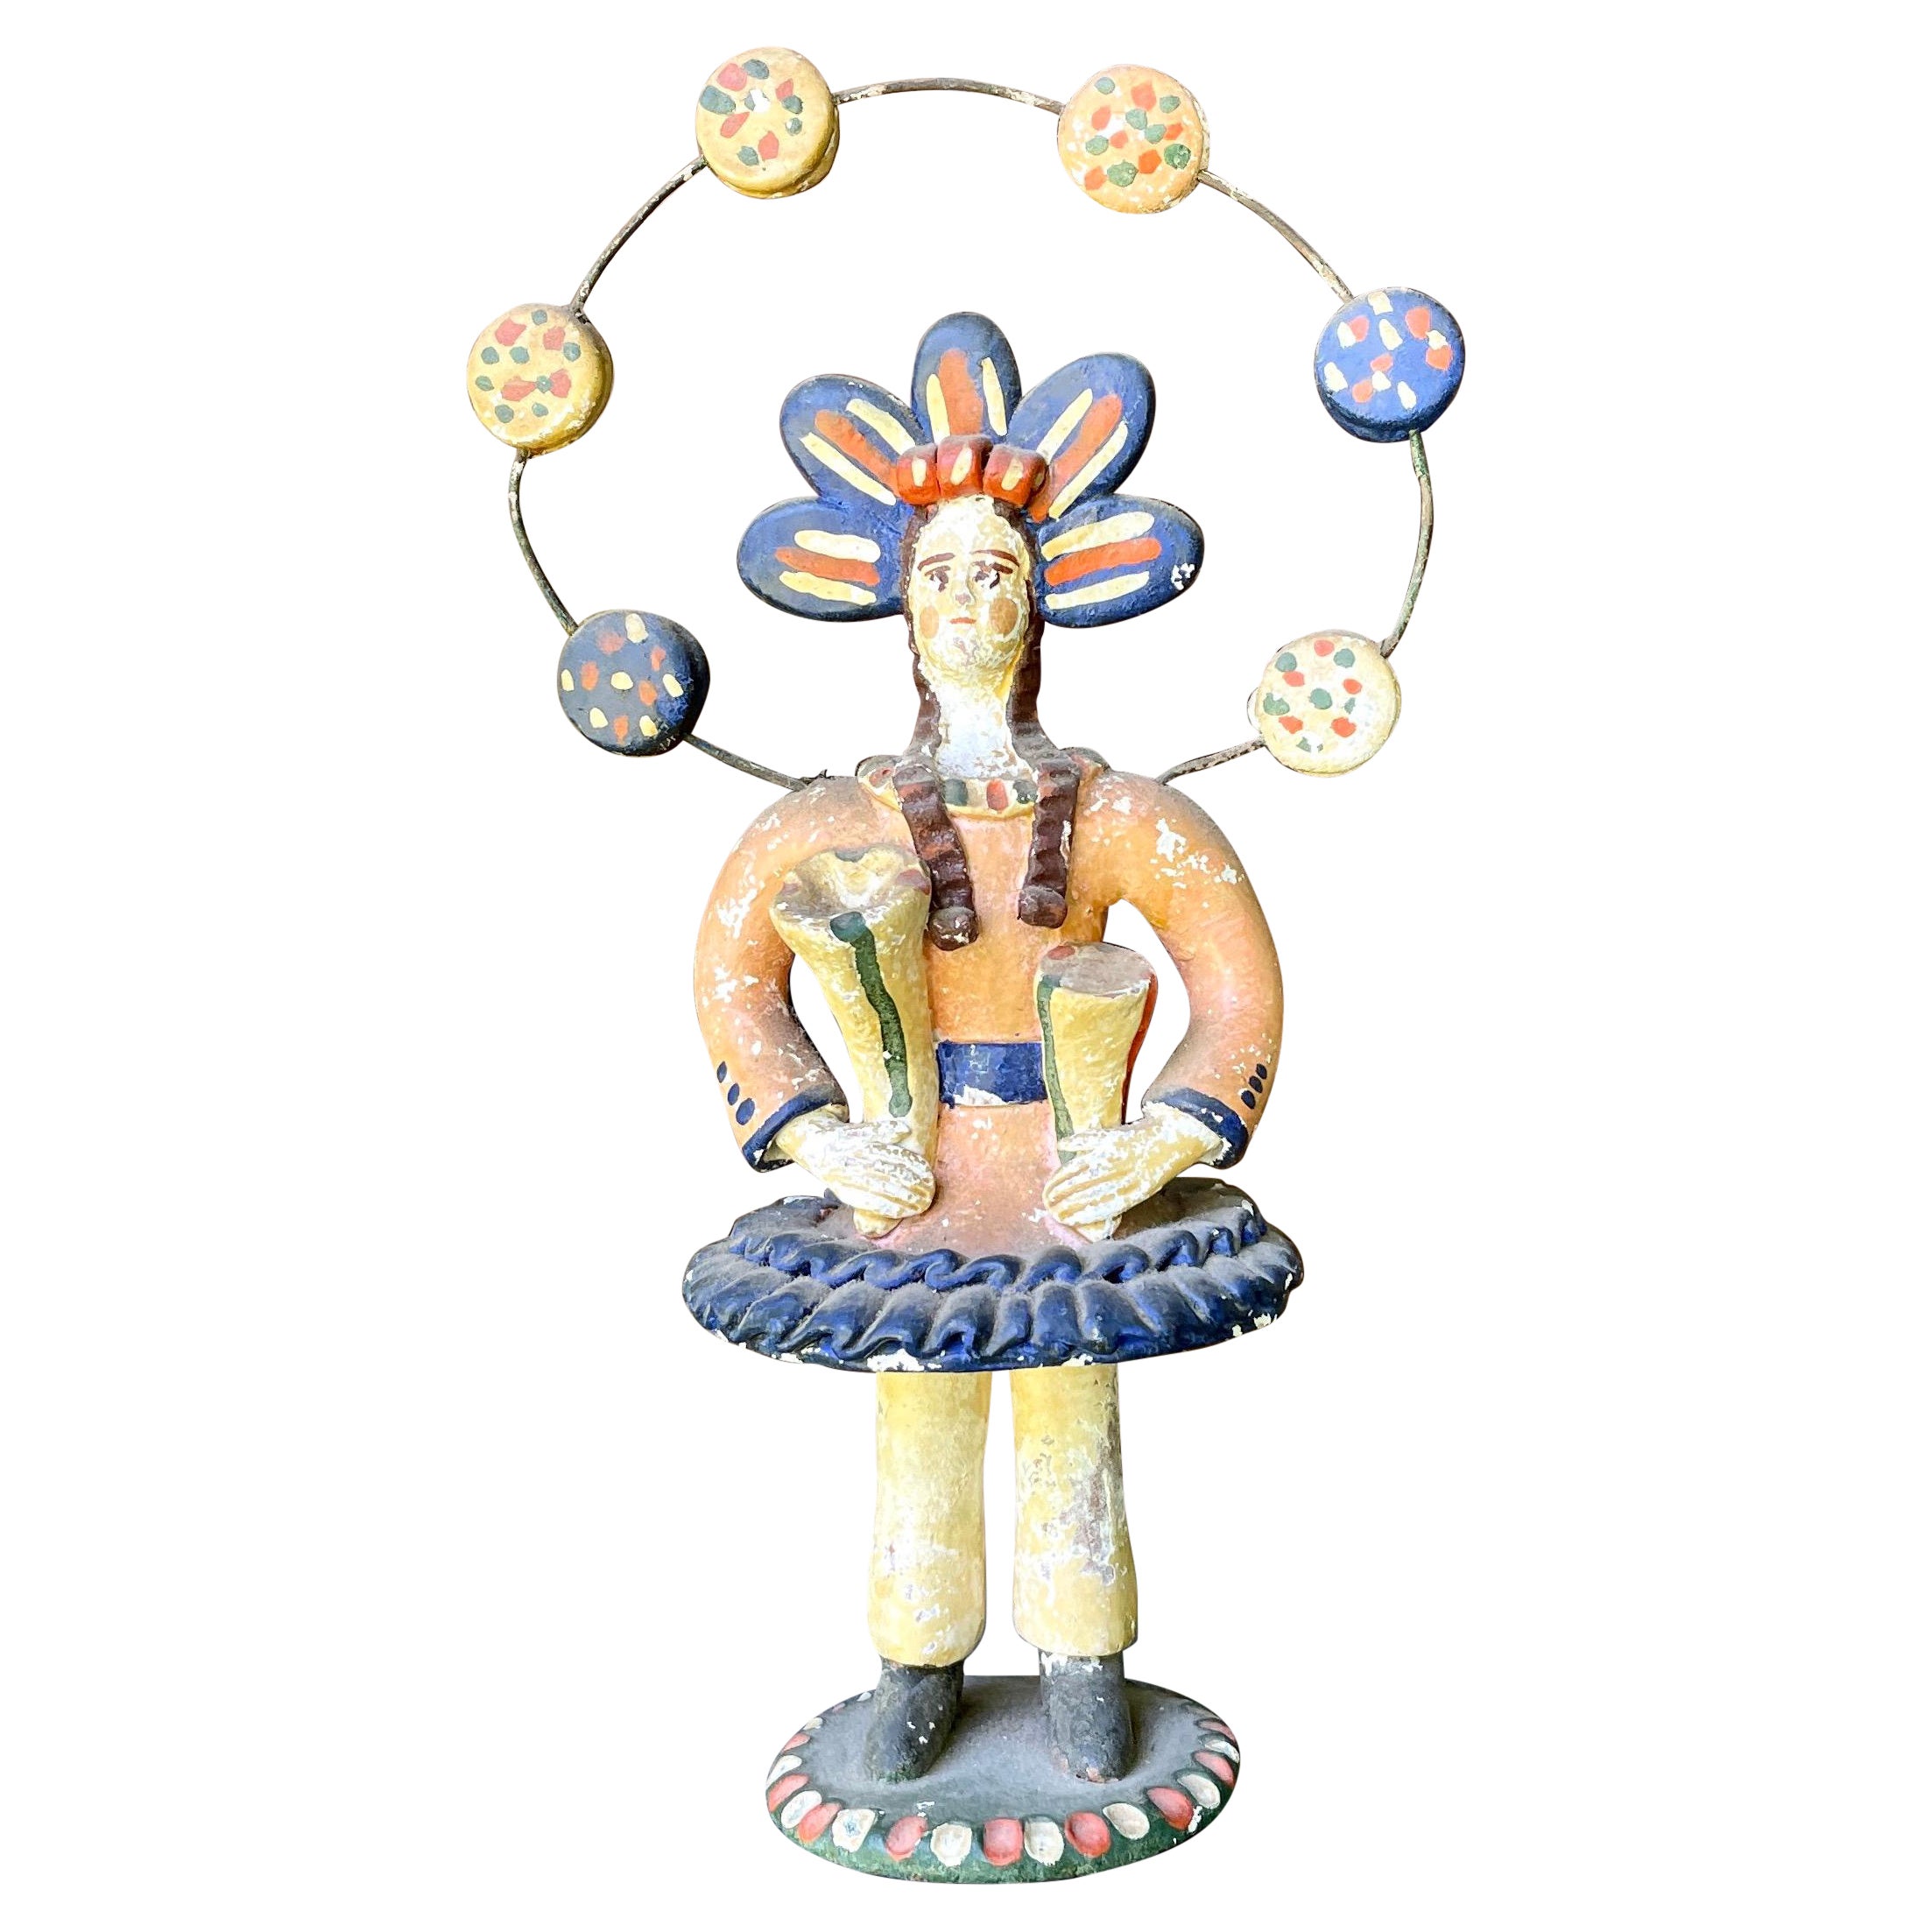 Vintage Folk Art Estremoz Clay World Heritage Figurine Portugal by Jose Moreira